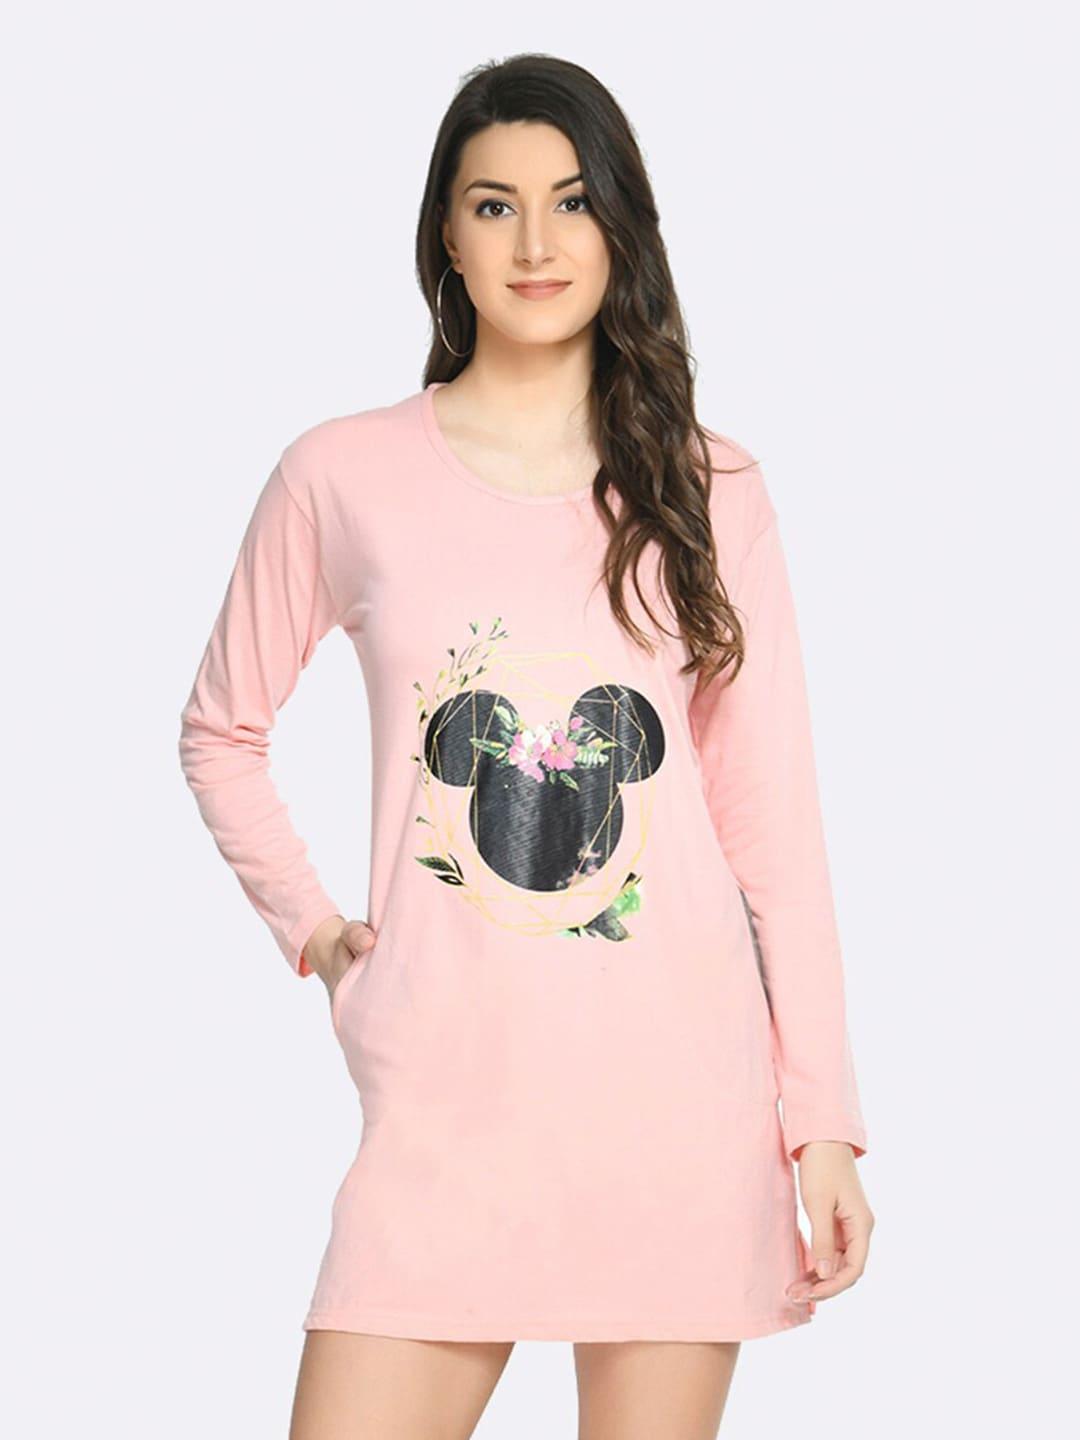 viral-trend-cartoon-character-printed-cotton-t-shirt-nightdress